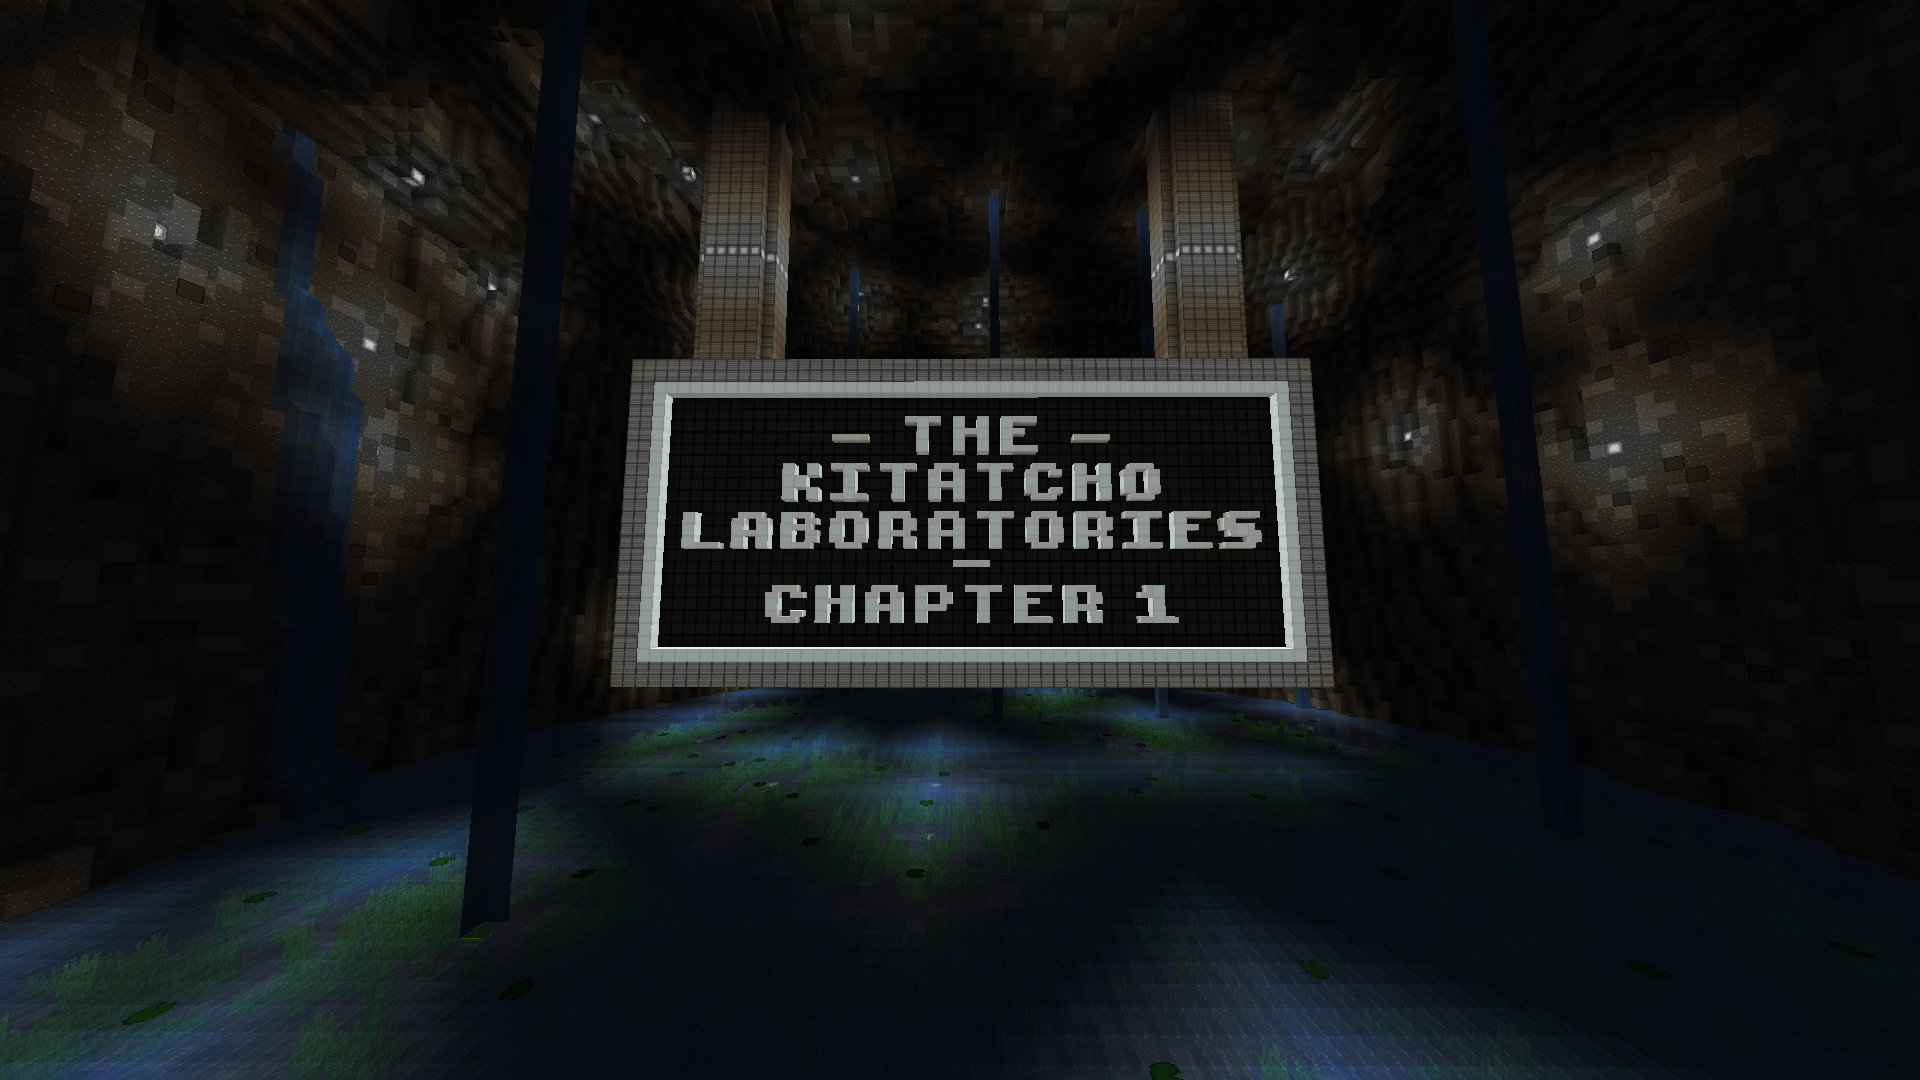 Descarca The Kitatcho Laboratories - Chapter 1 (Reboot) pentru Minecraft 1.16.3